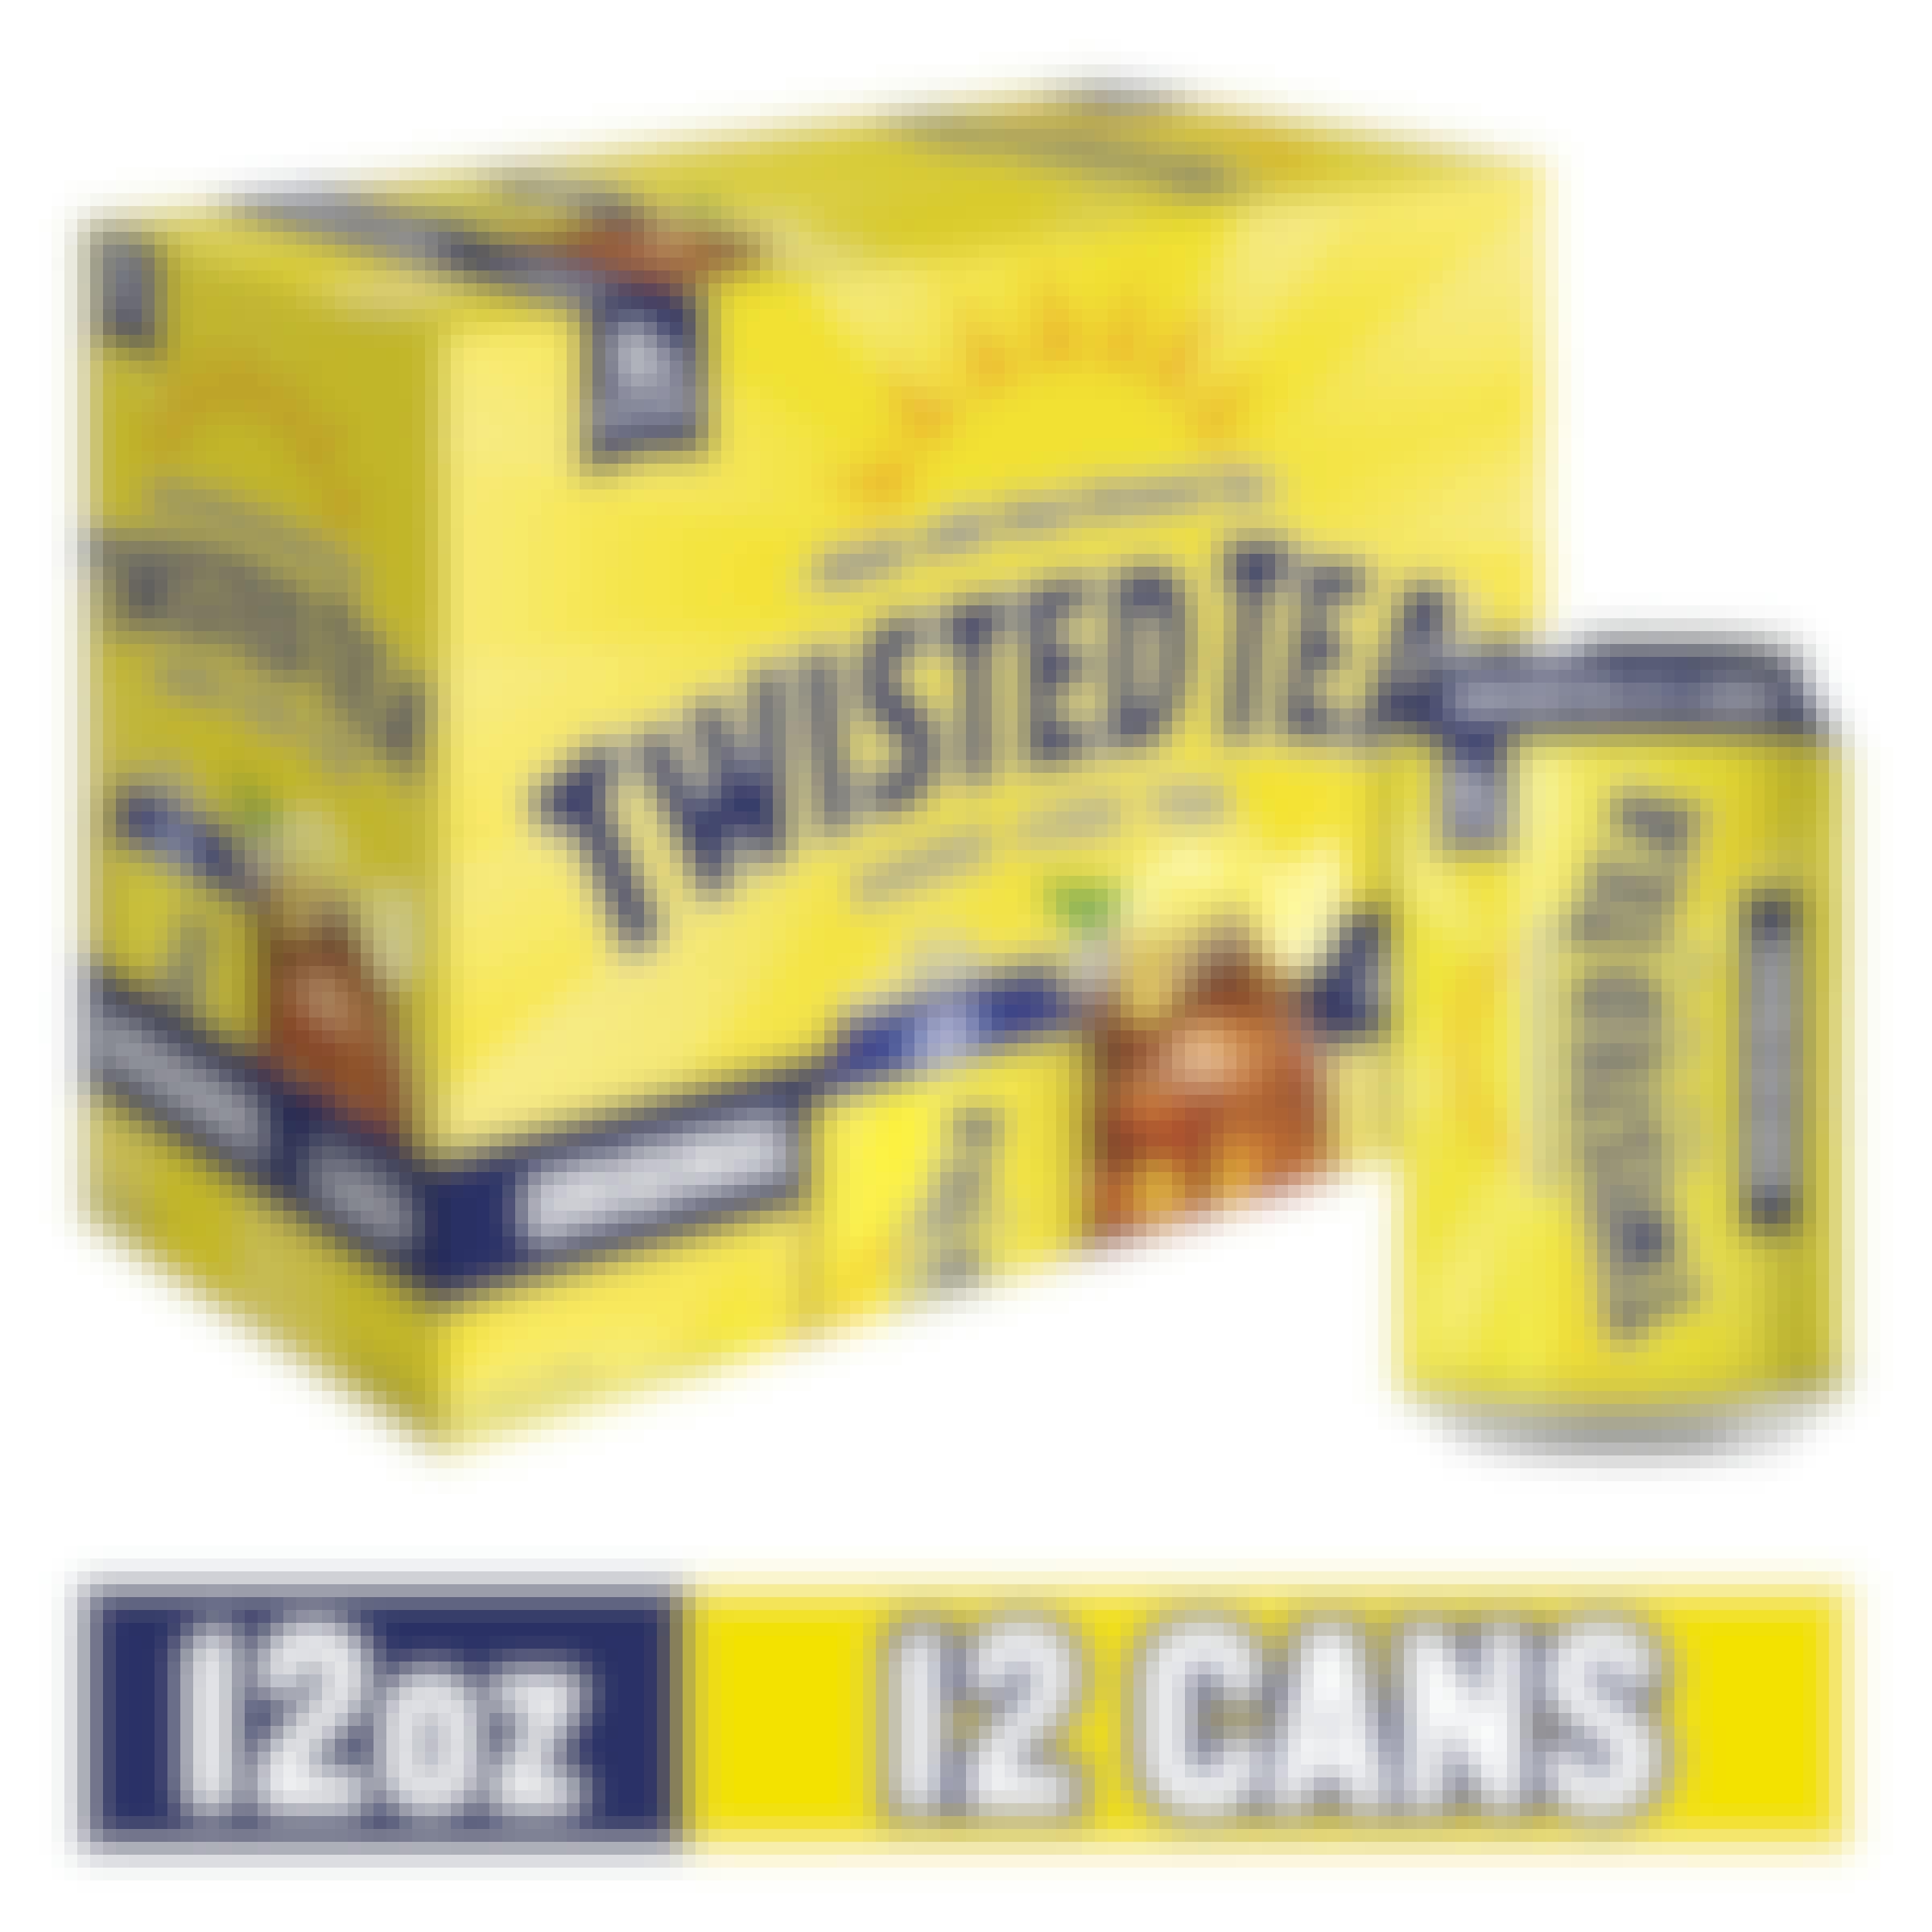 Twisted Tea Original Hard Iced Tea 12 pack 12 oz. Can